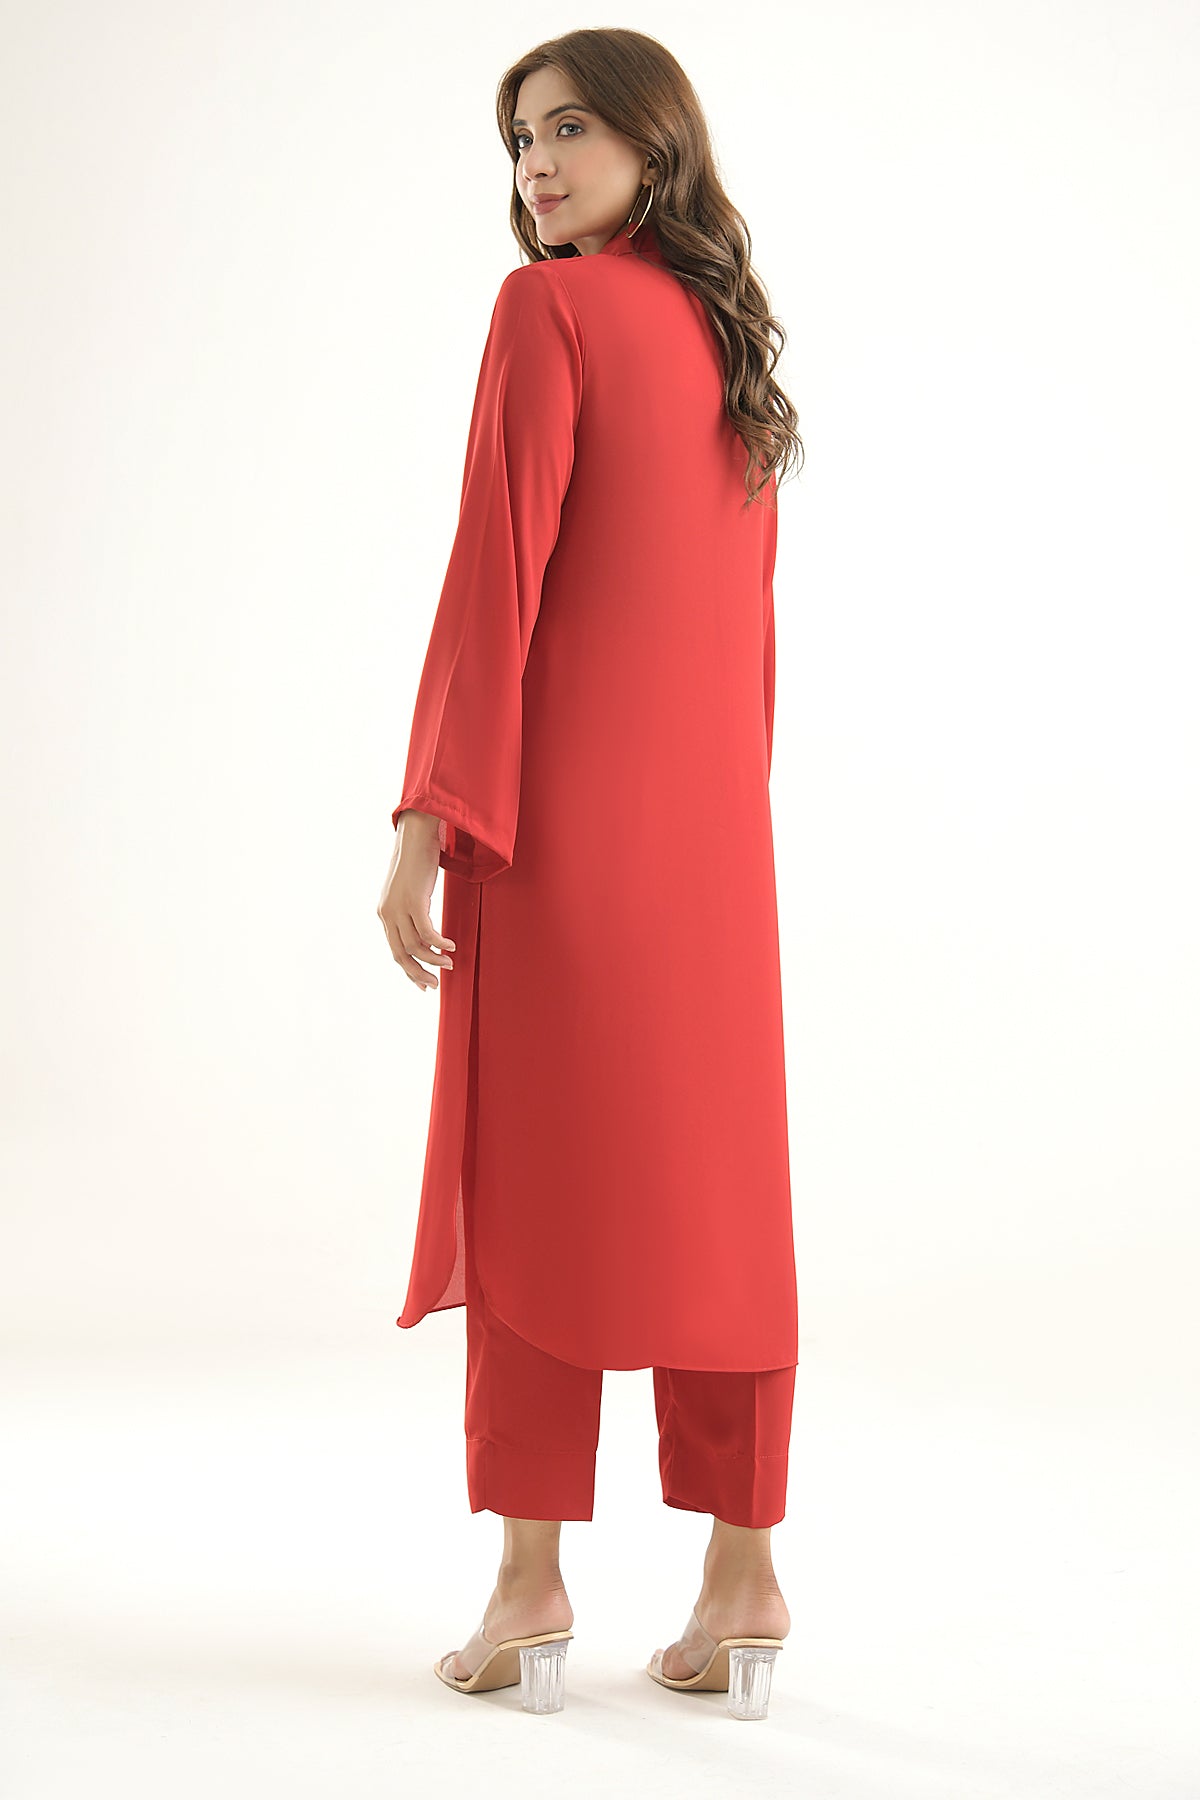 Red Stylish Dress - Peach Republic